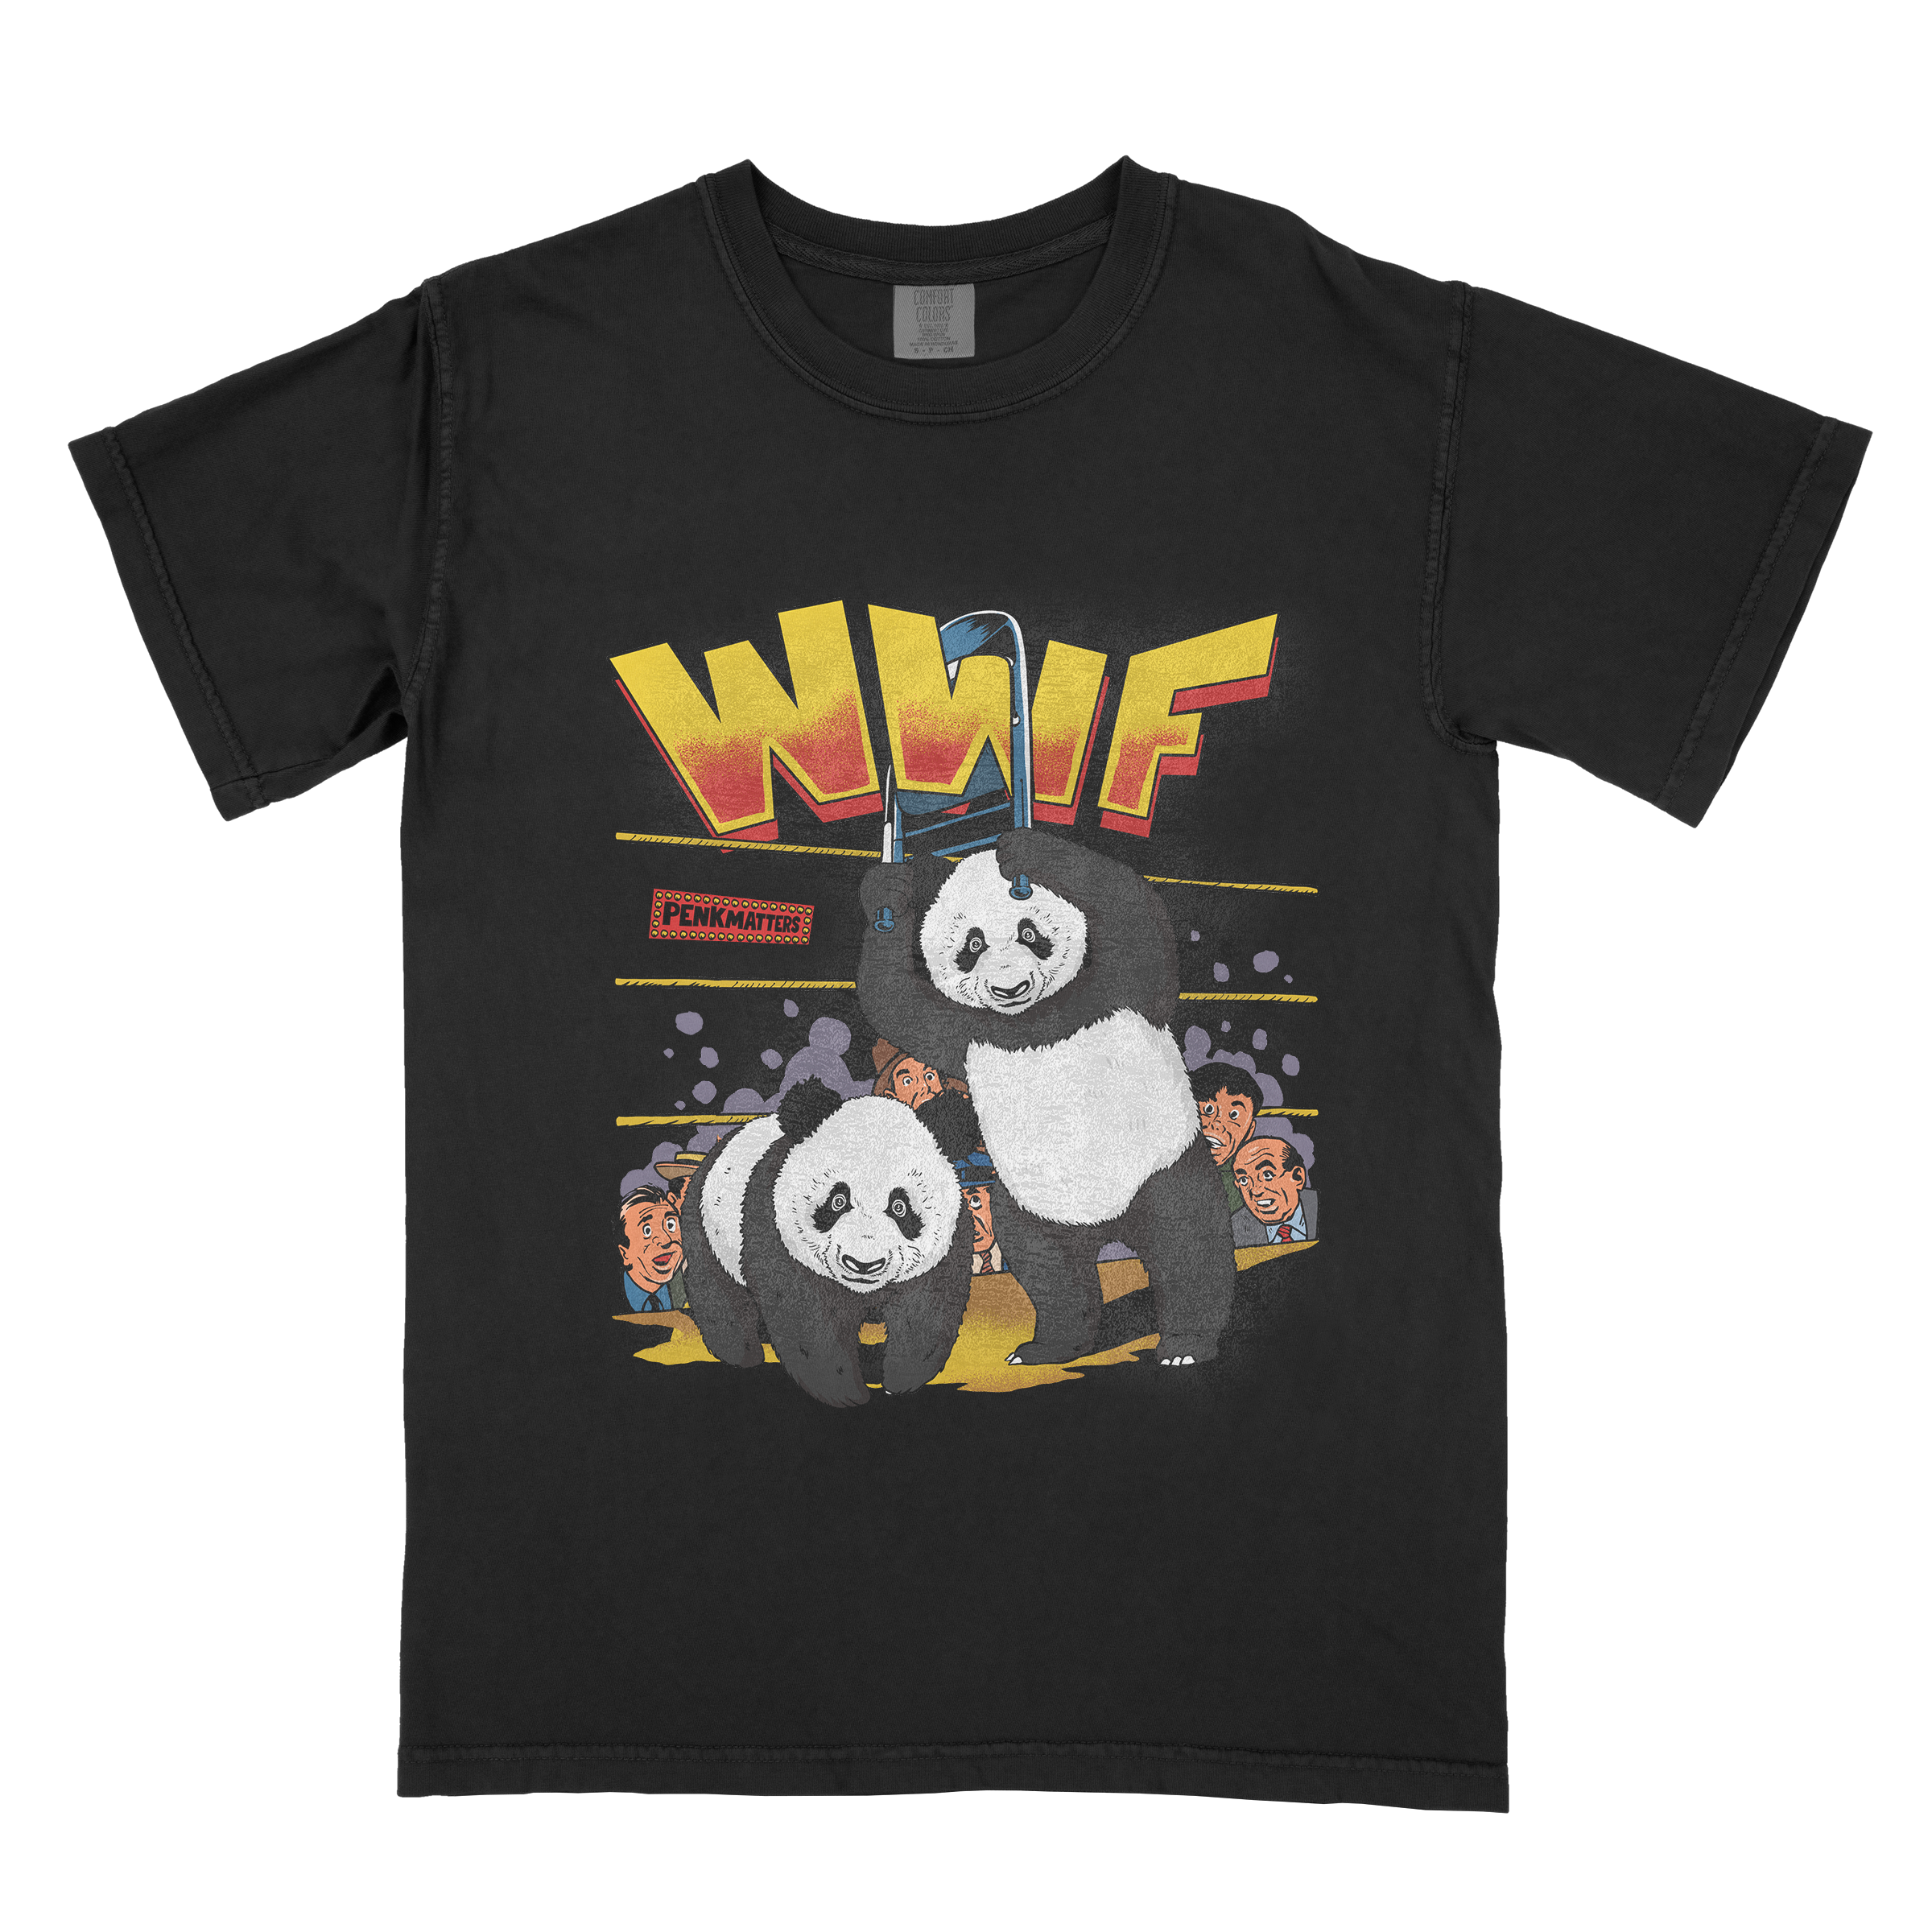 "WWF" T-Shirt